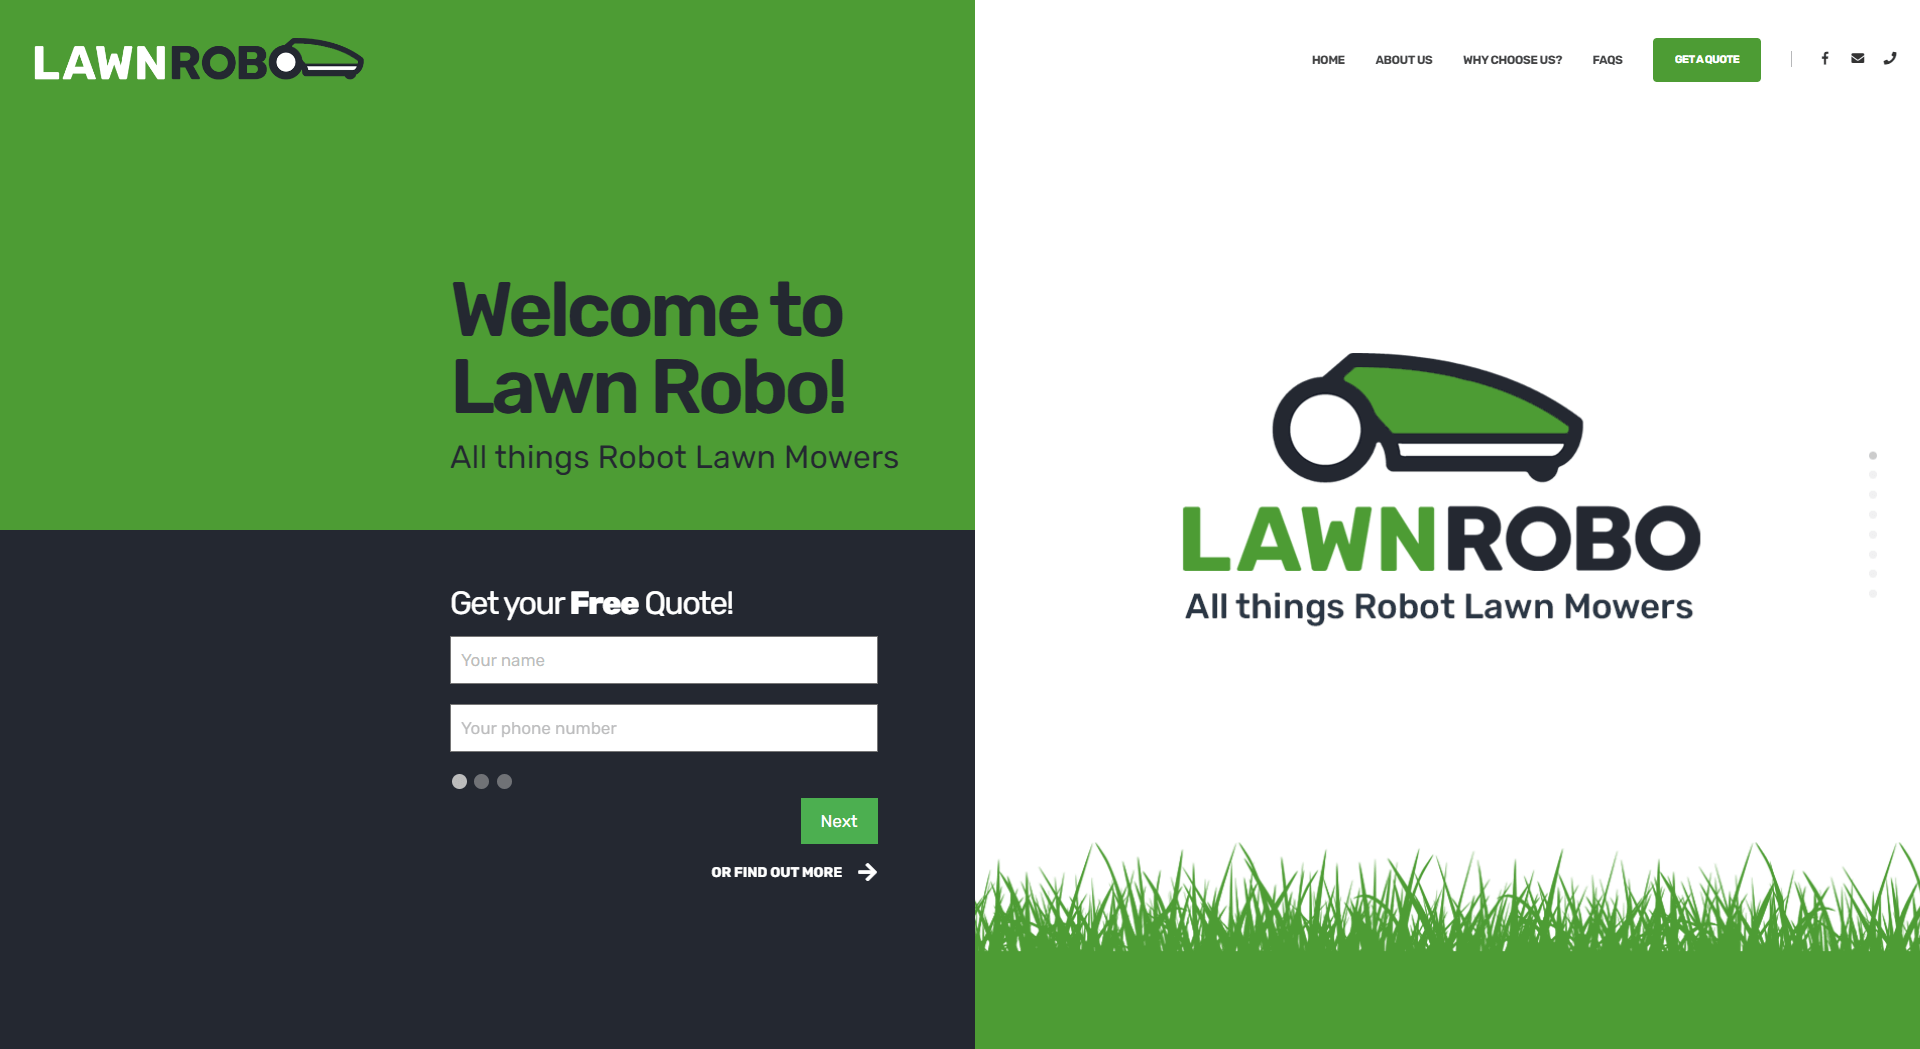 Lawn Robo